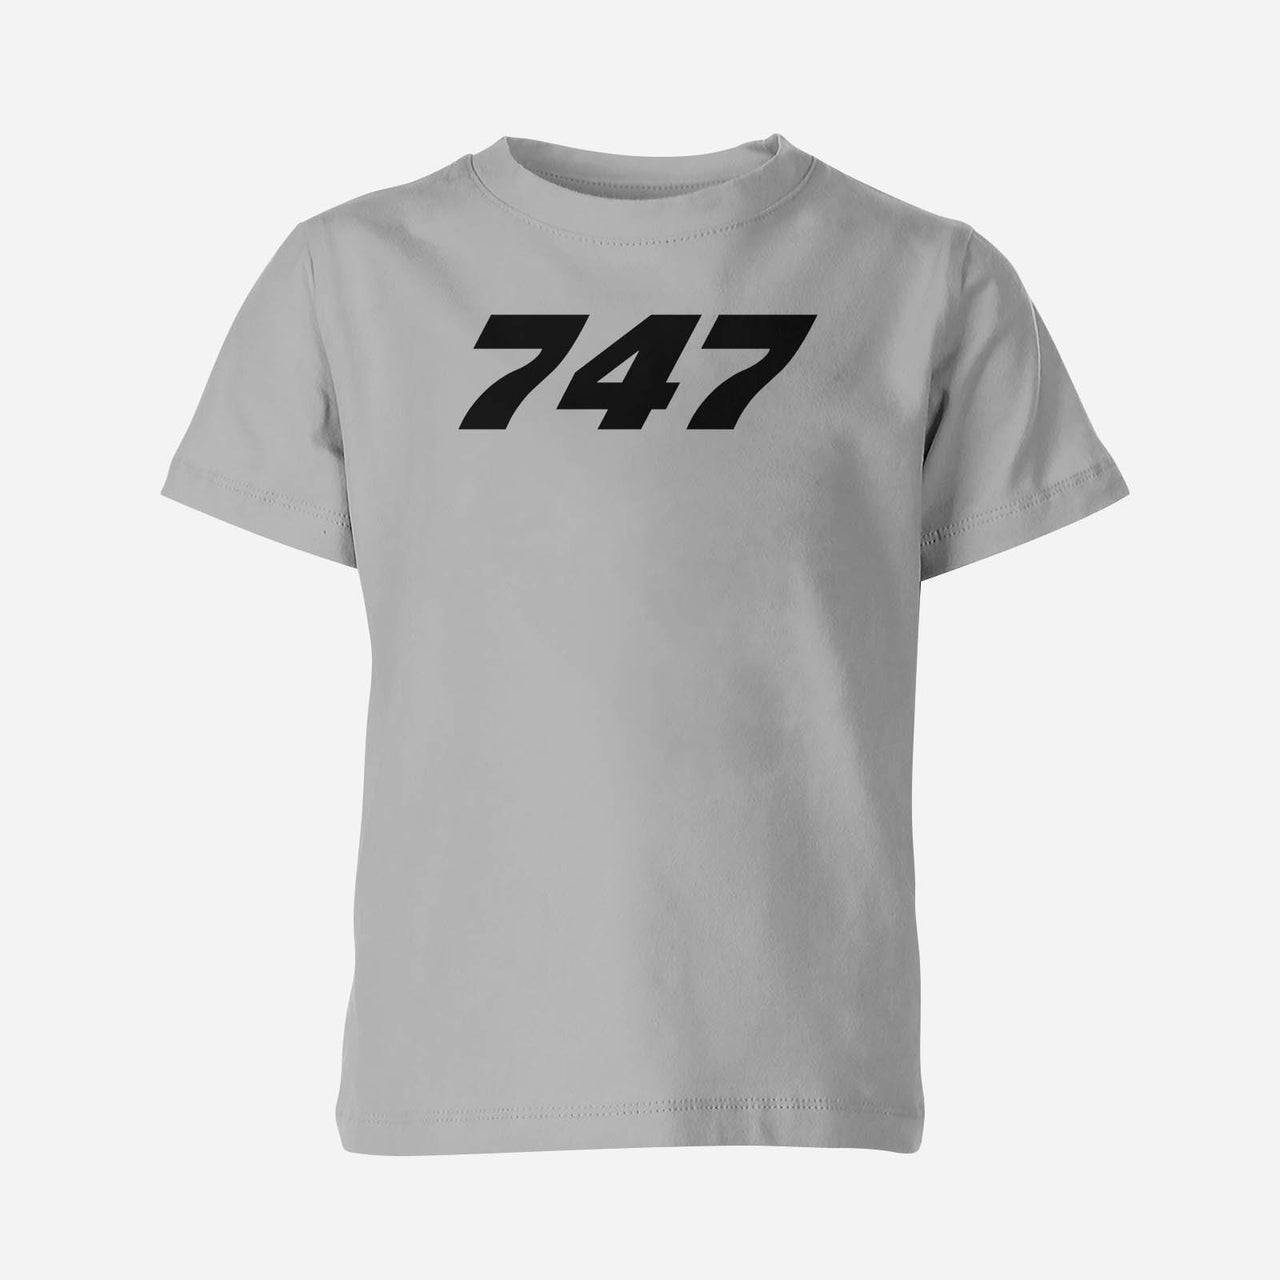 747 Flat Text Designed Children T-Shirts